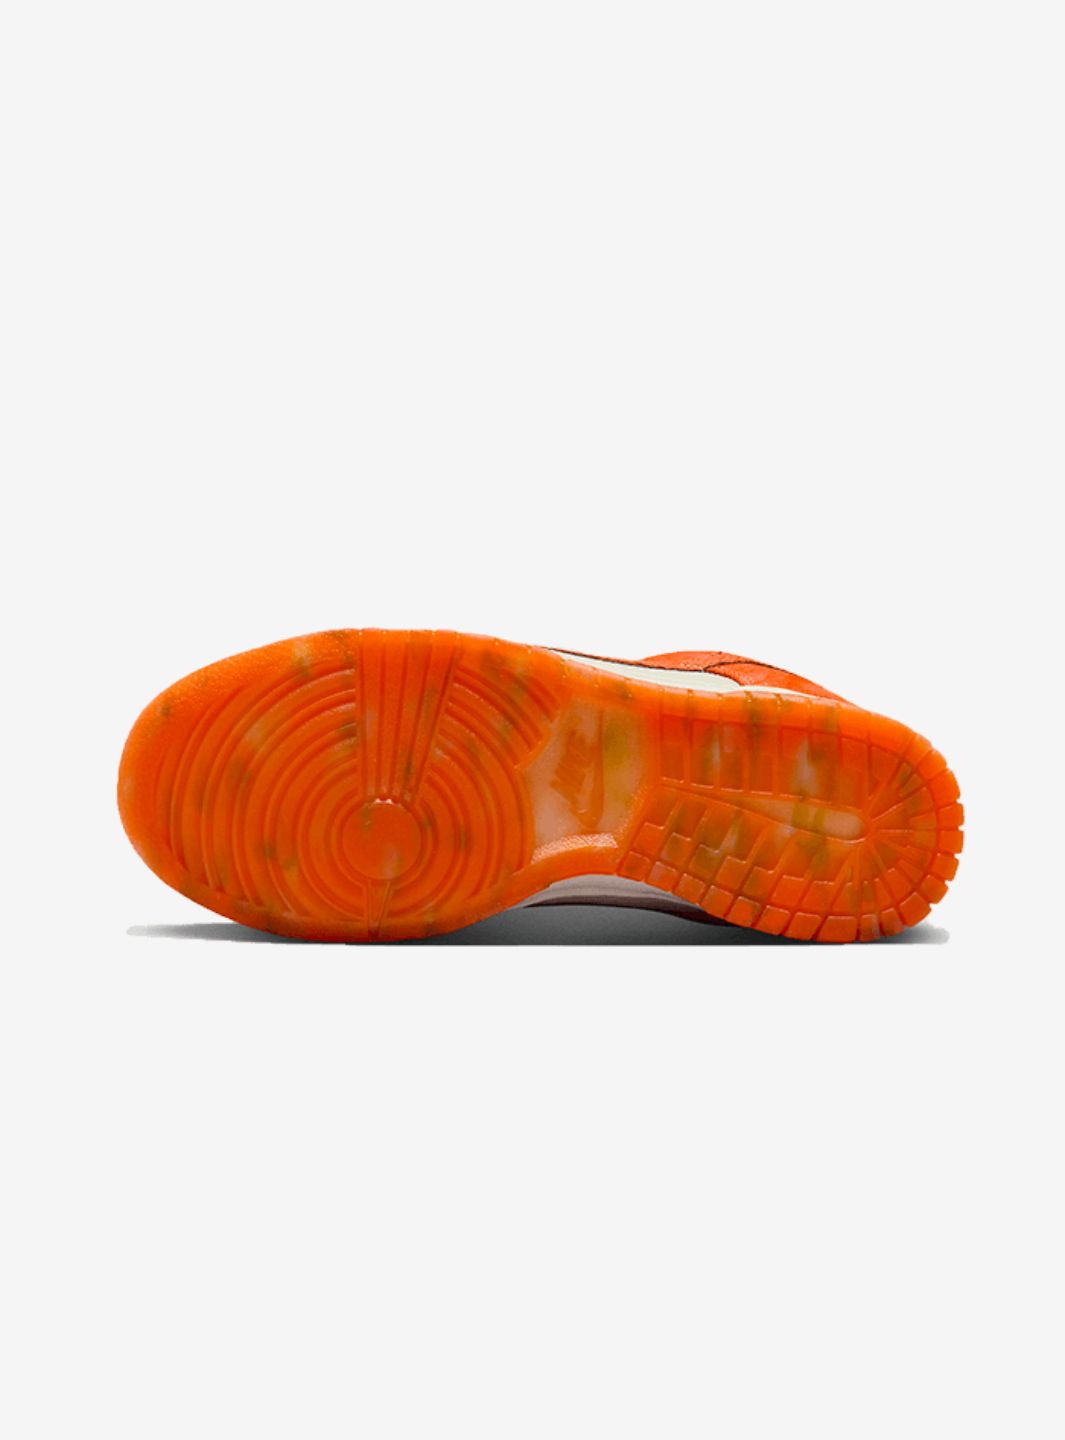 Nike Dunk Low Cracked Orange - FN7773-001 | ResellZone